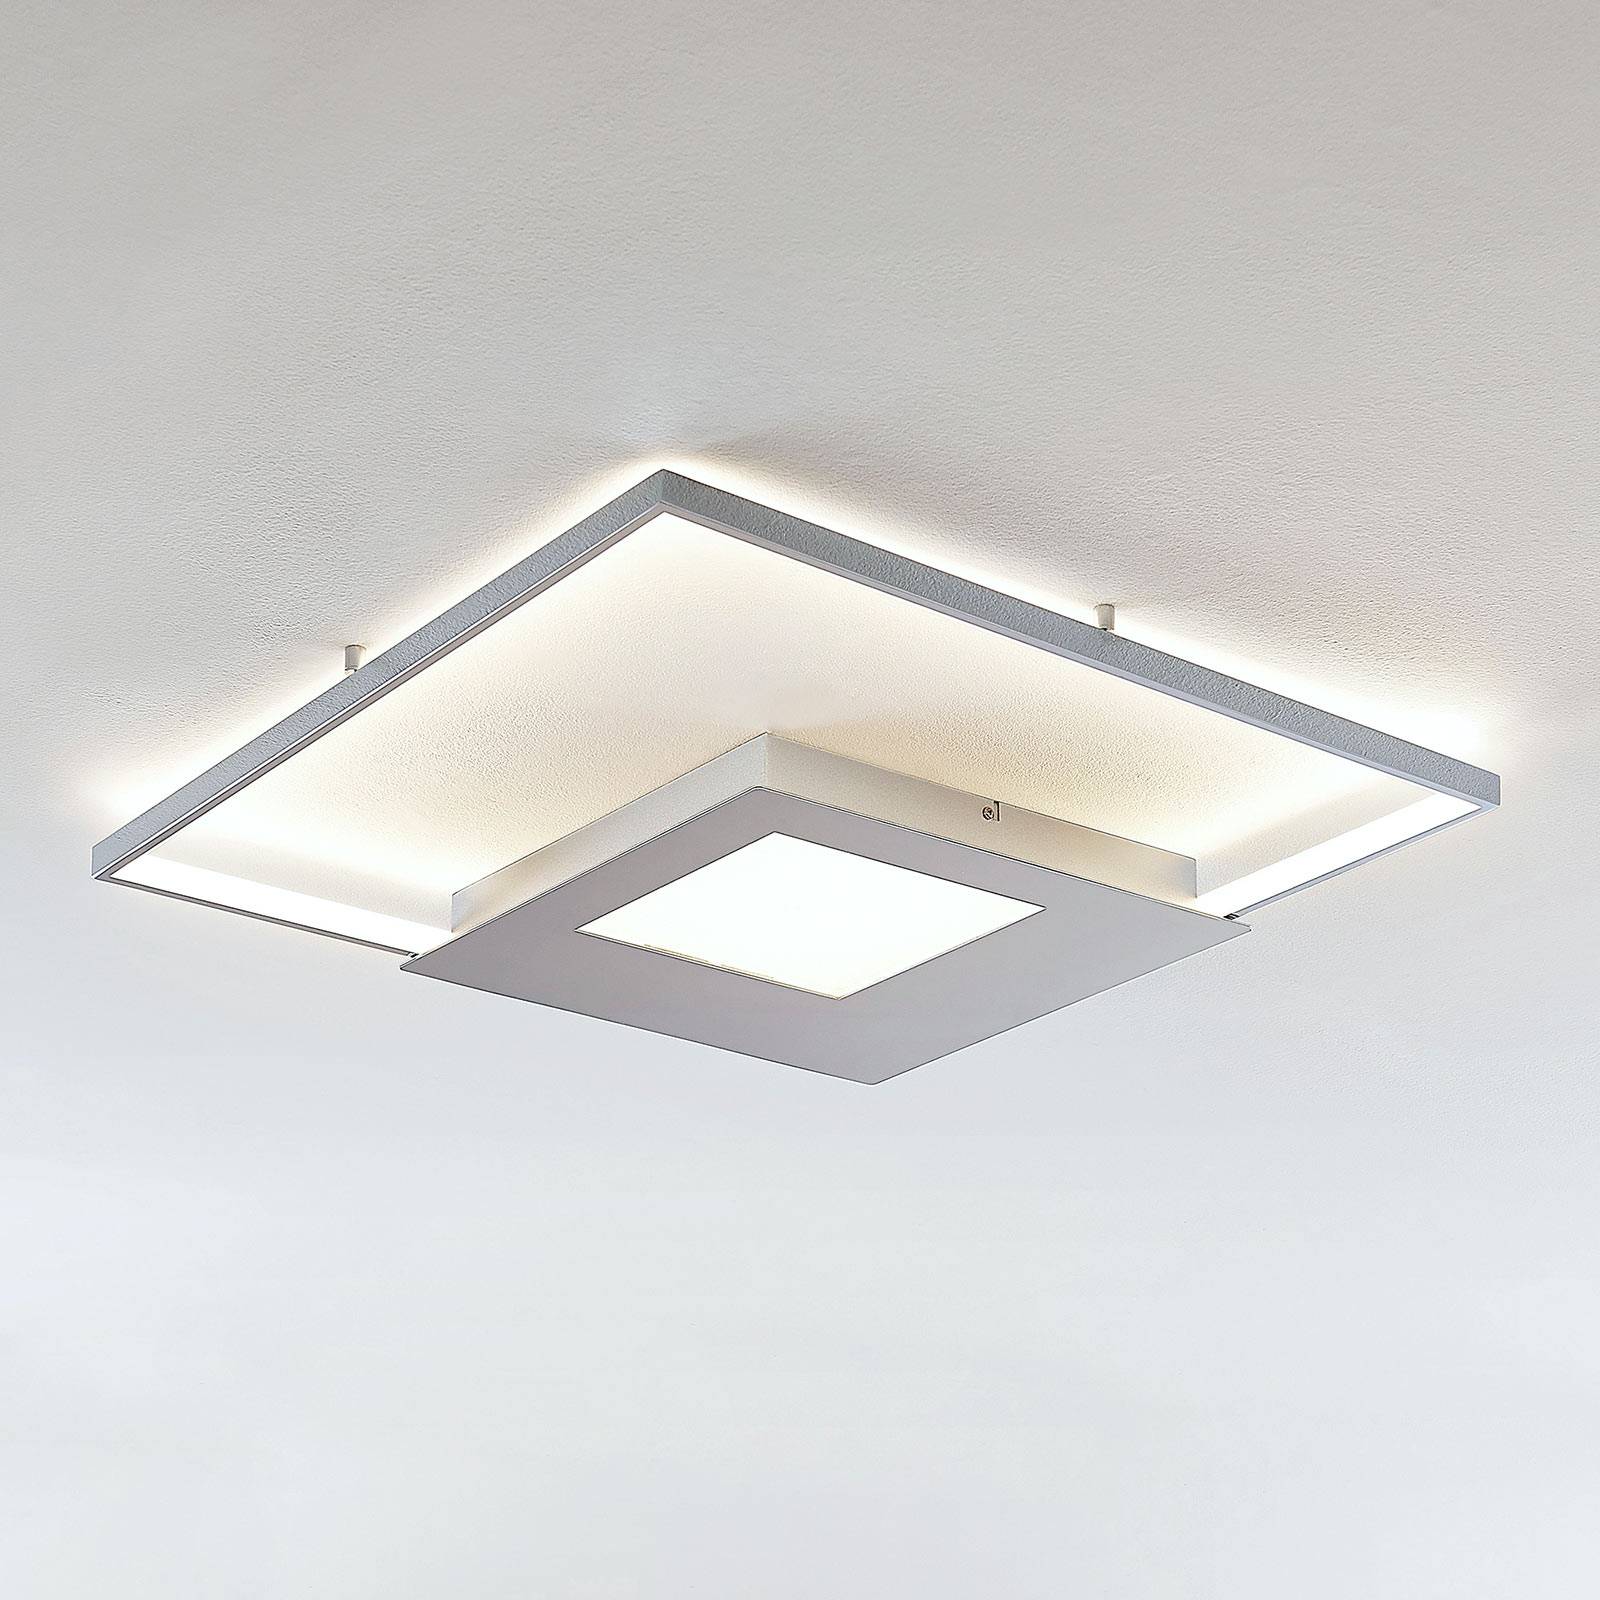 Lampa sufitowa LED Anays, kątowa, 62 cm